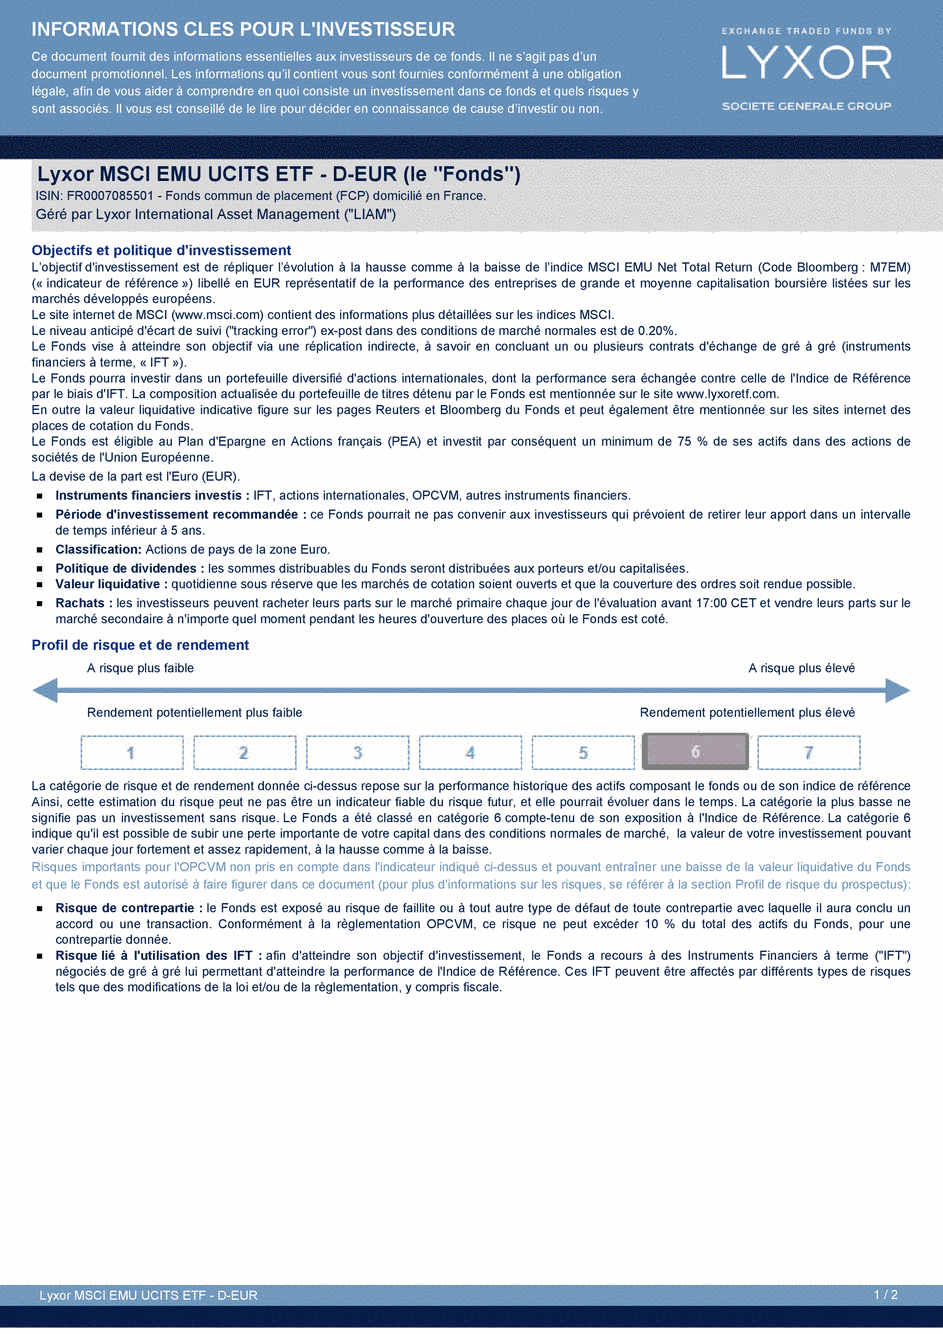 DICI LYXOR MSCI EMU UCITS ETF - 29/10/2015 - Français